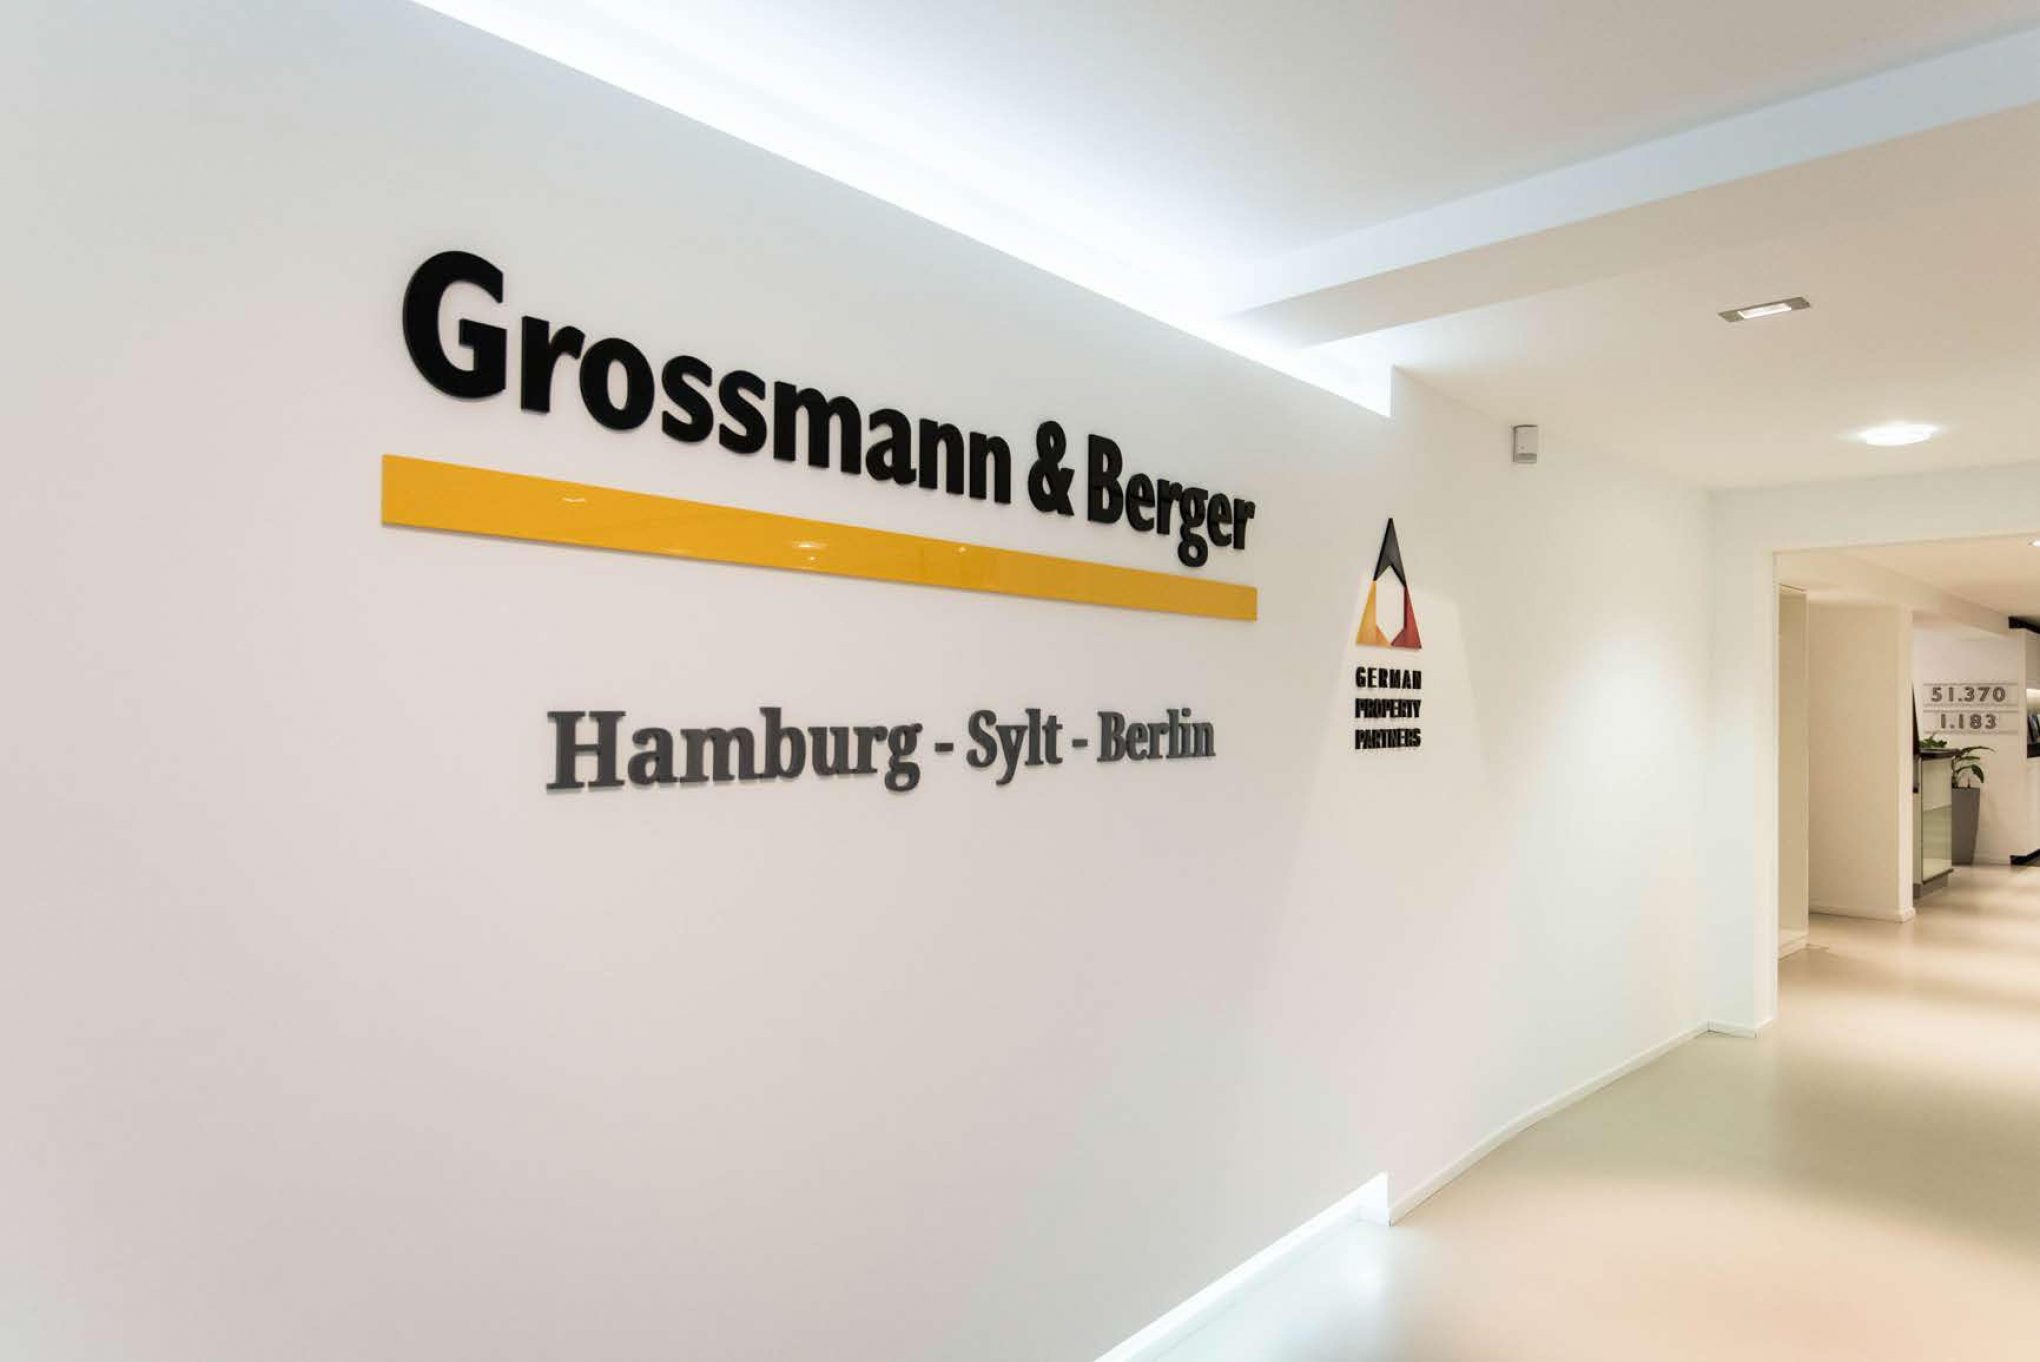 Grossmann & Berger Hamburg Wohn- und Gewerbeimmobilien